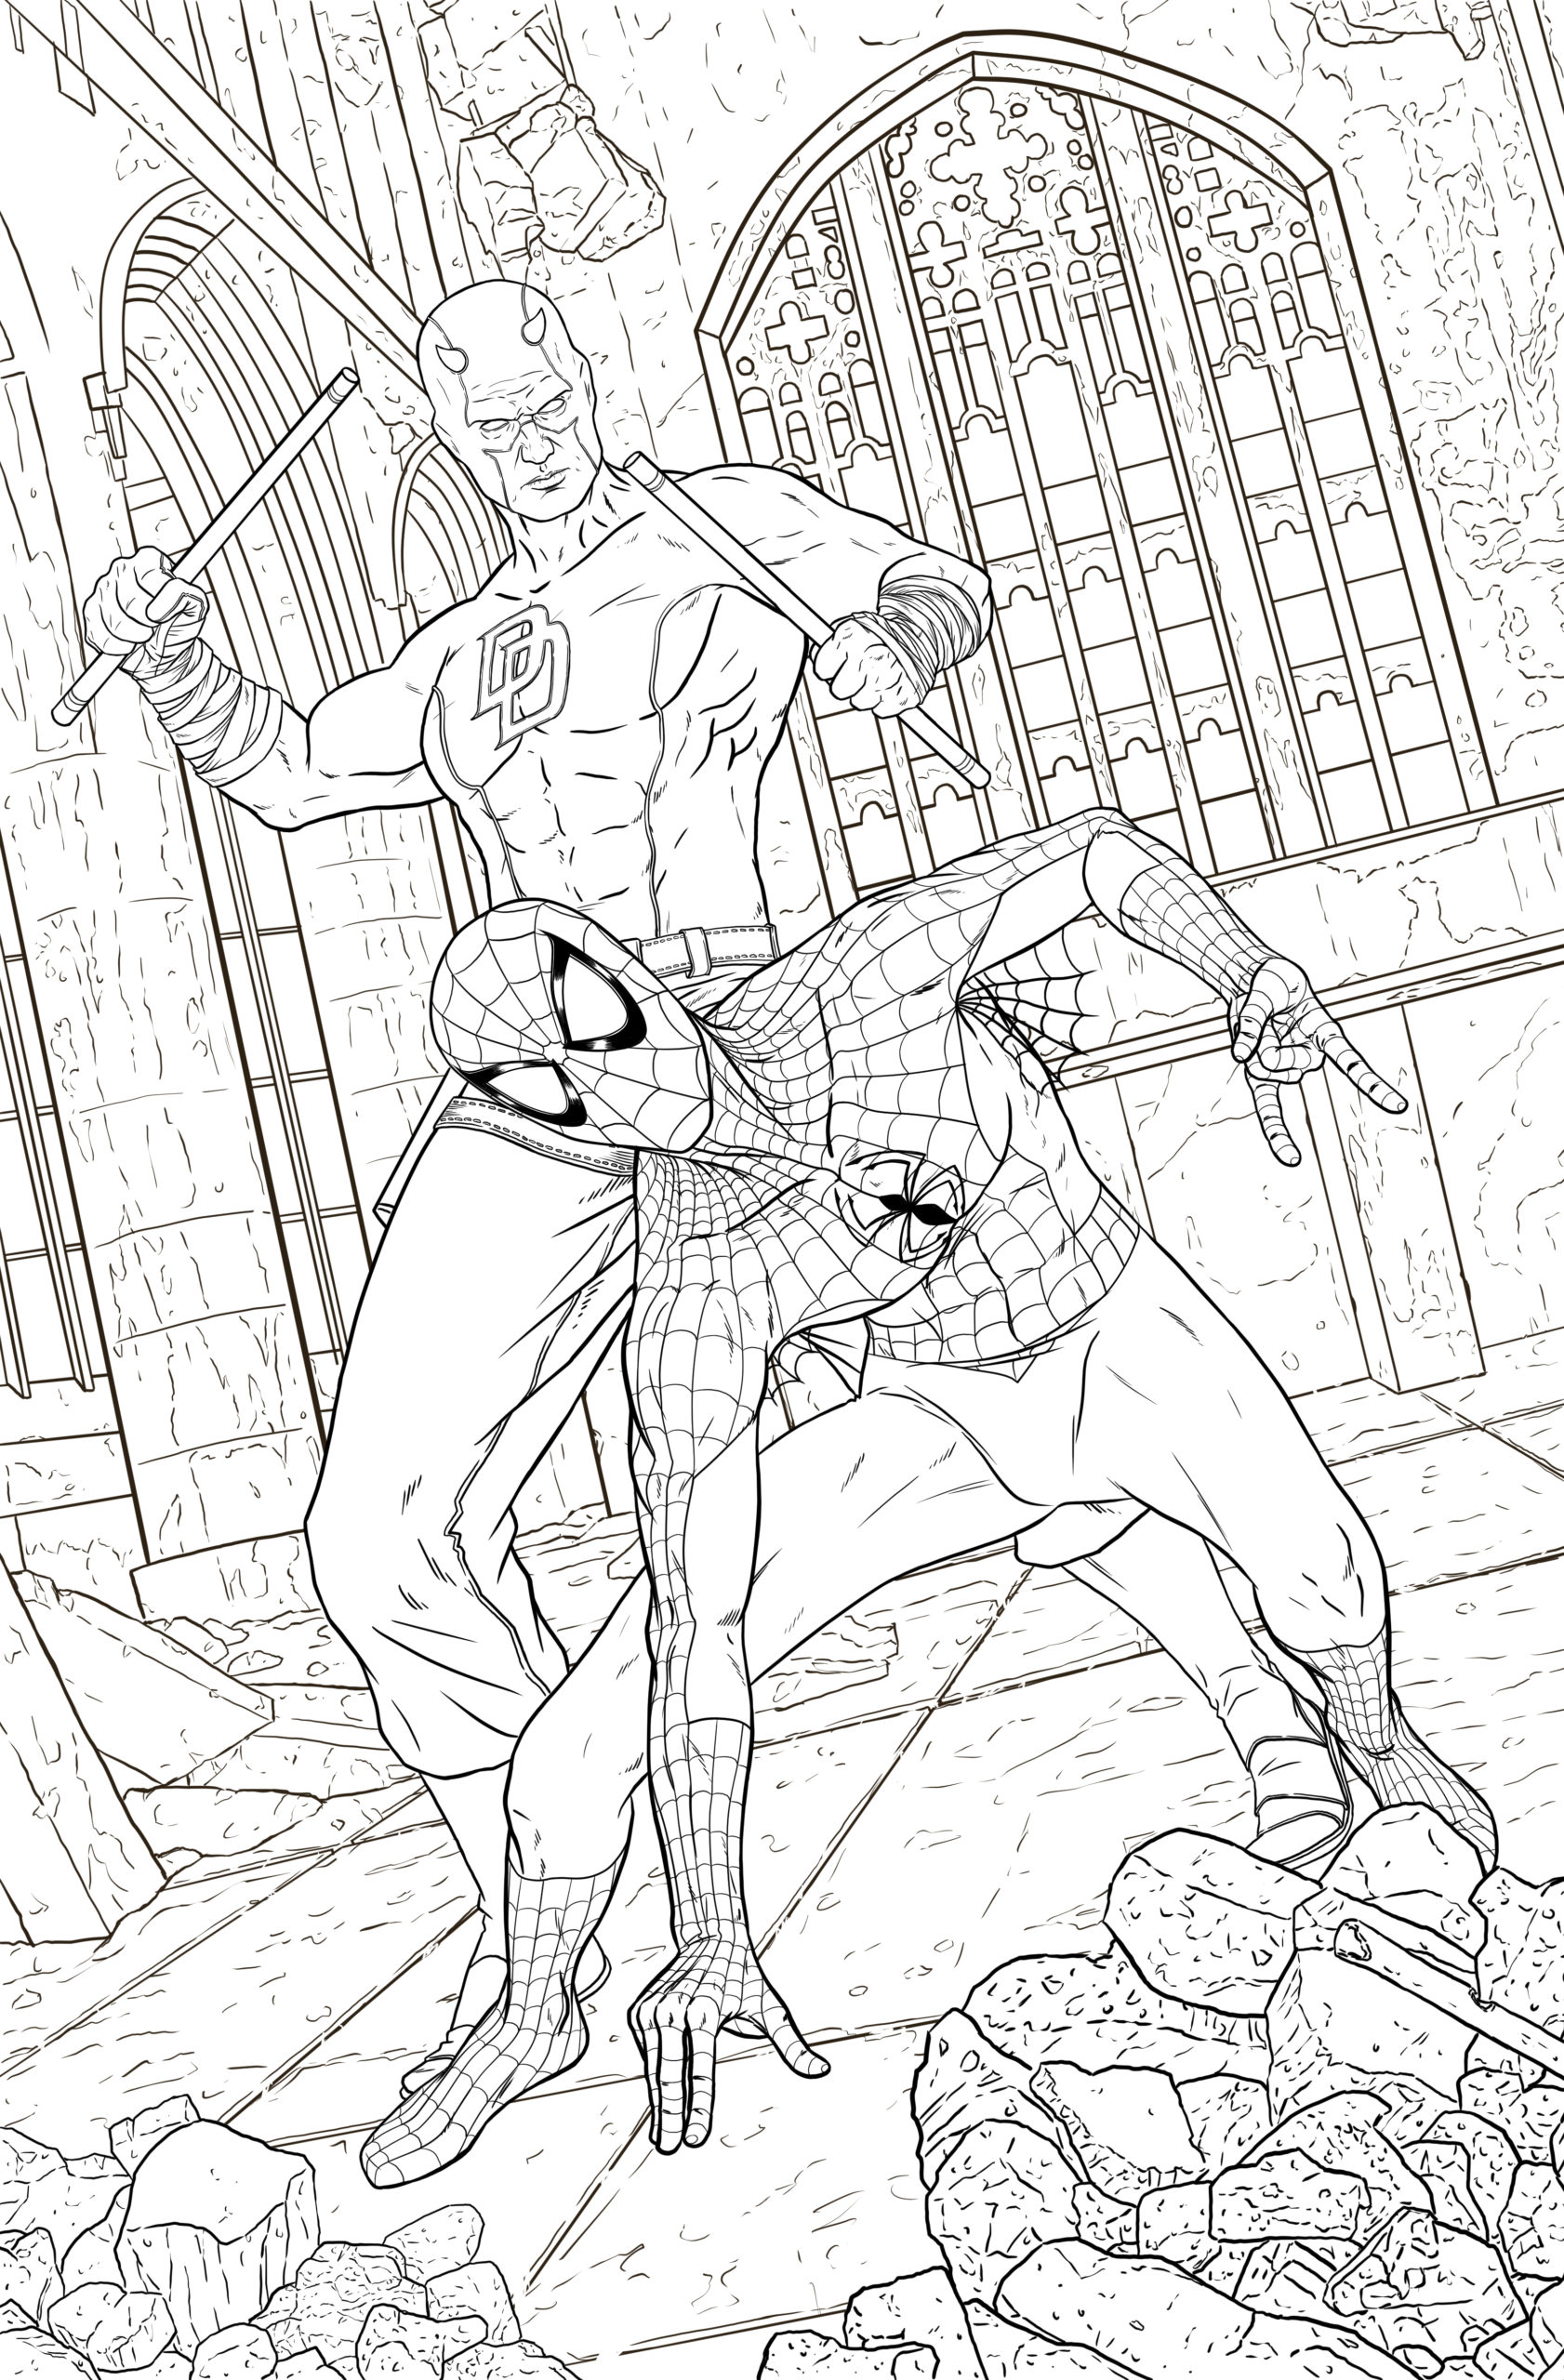 Marvel Team-Up Daredevil and Spider-Man by Duke